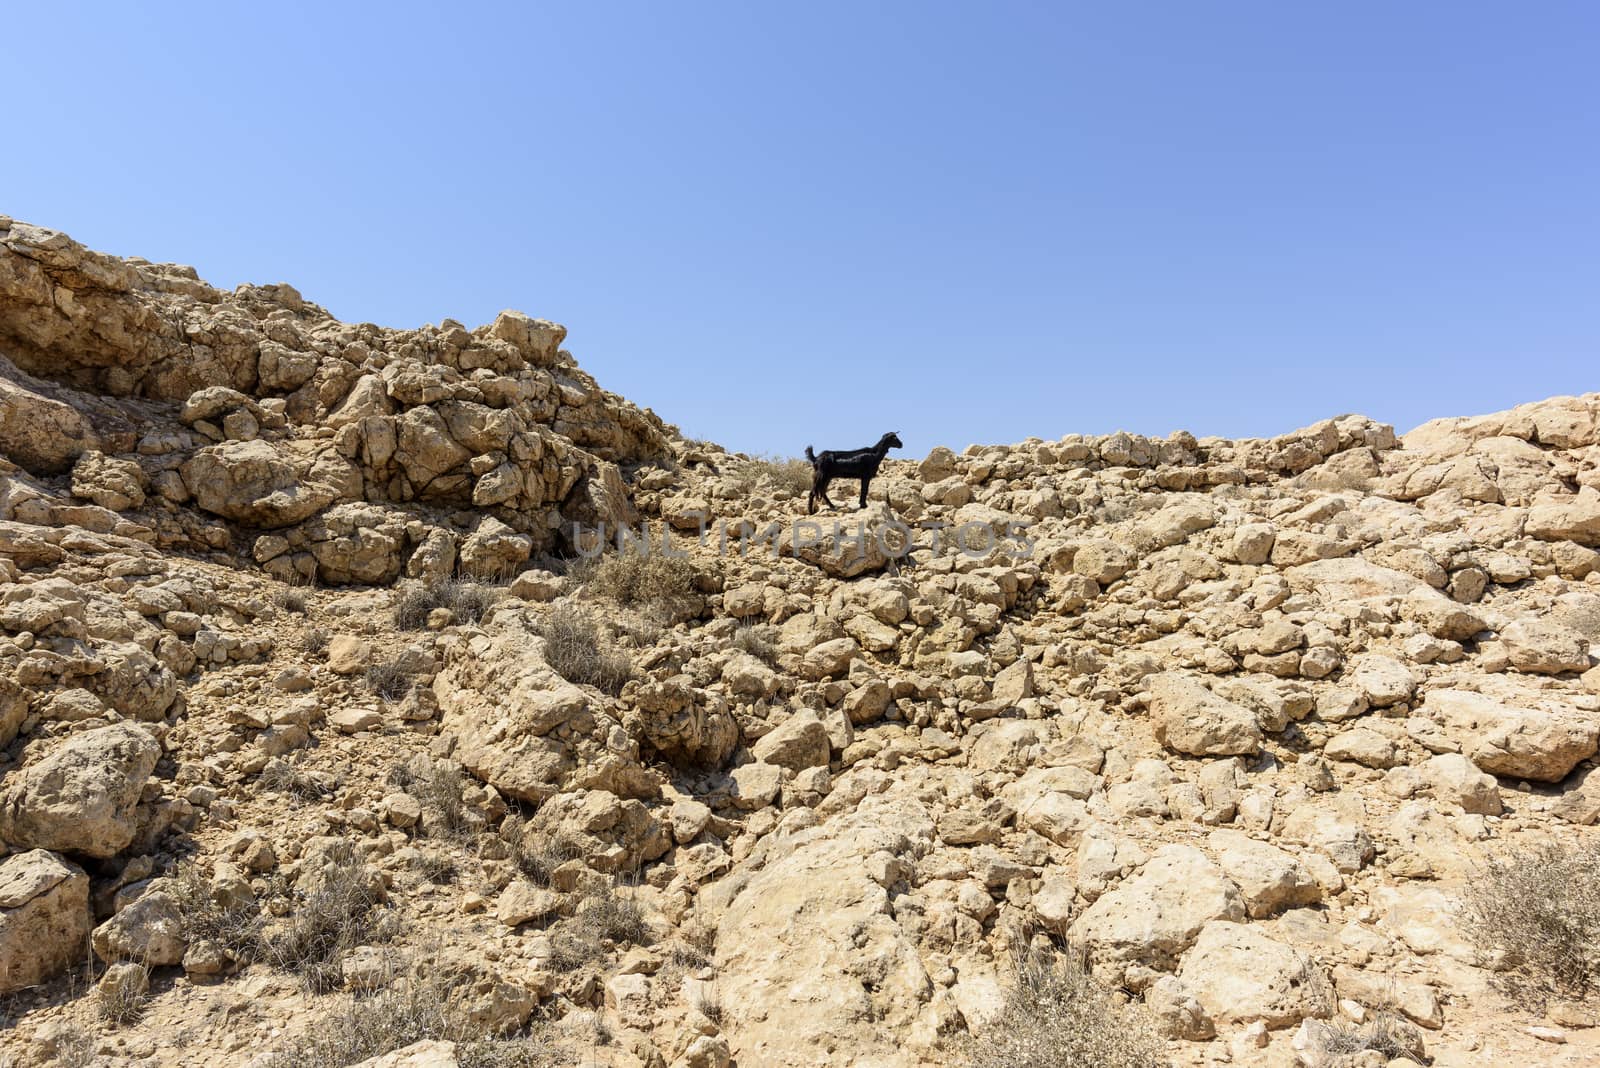 Sheep in the mountain, Ras Al jinz, Sultanate of Oman by GABIS